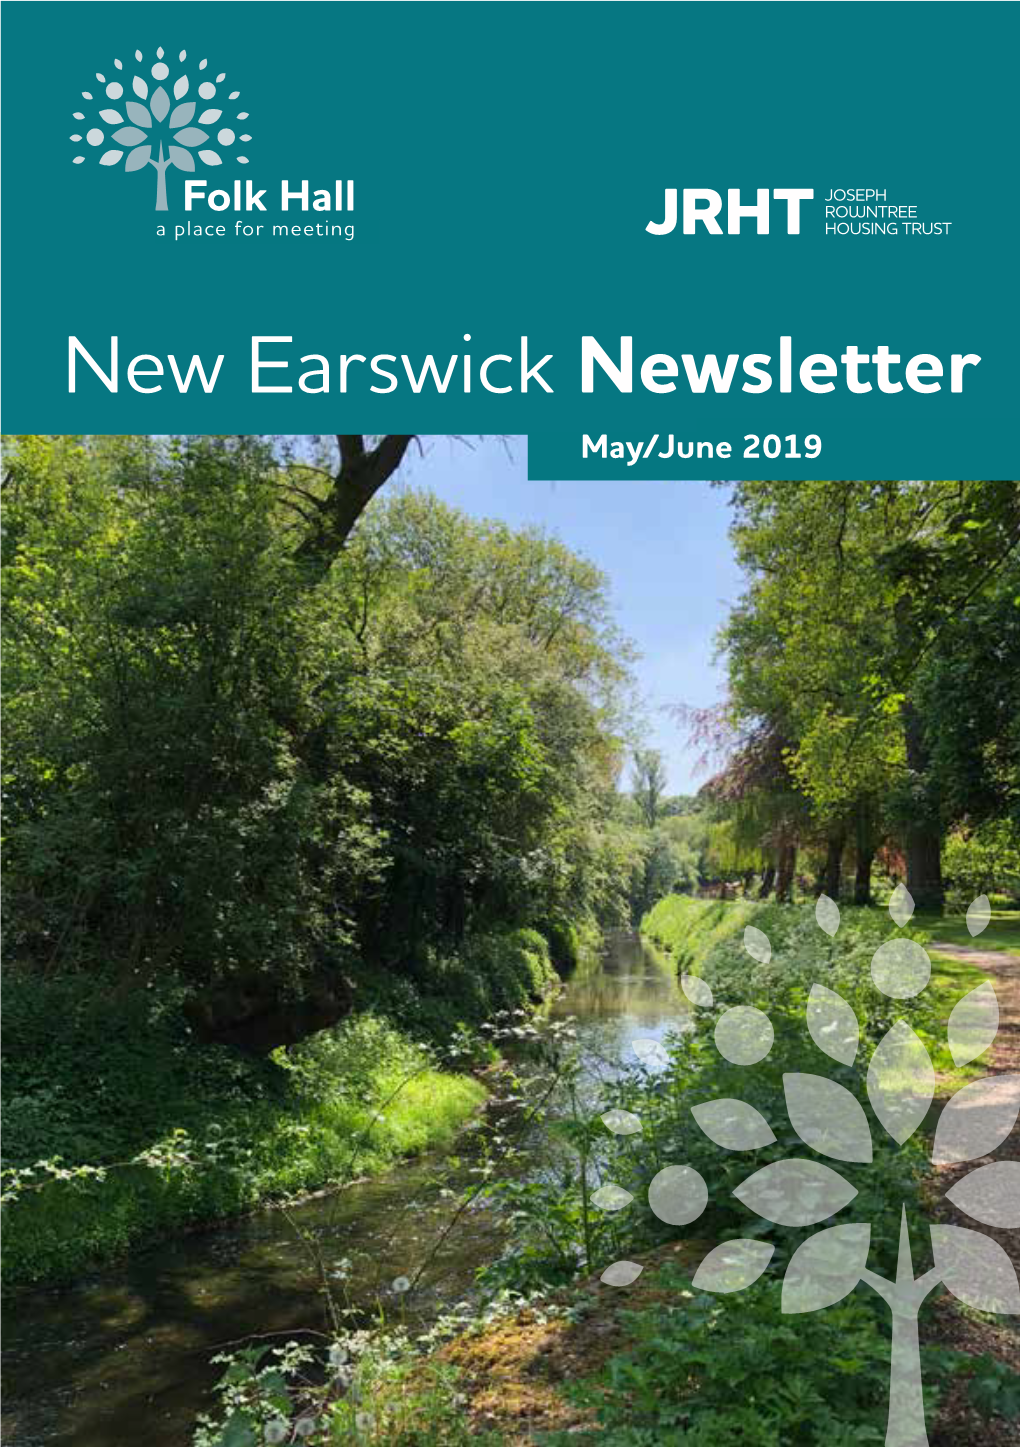 New Earswick Newsletter May/June 2019